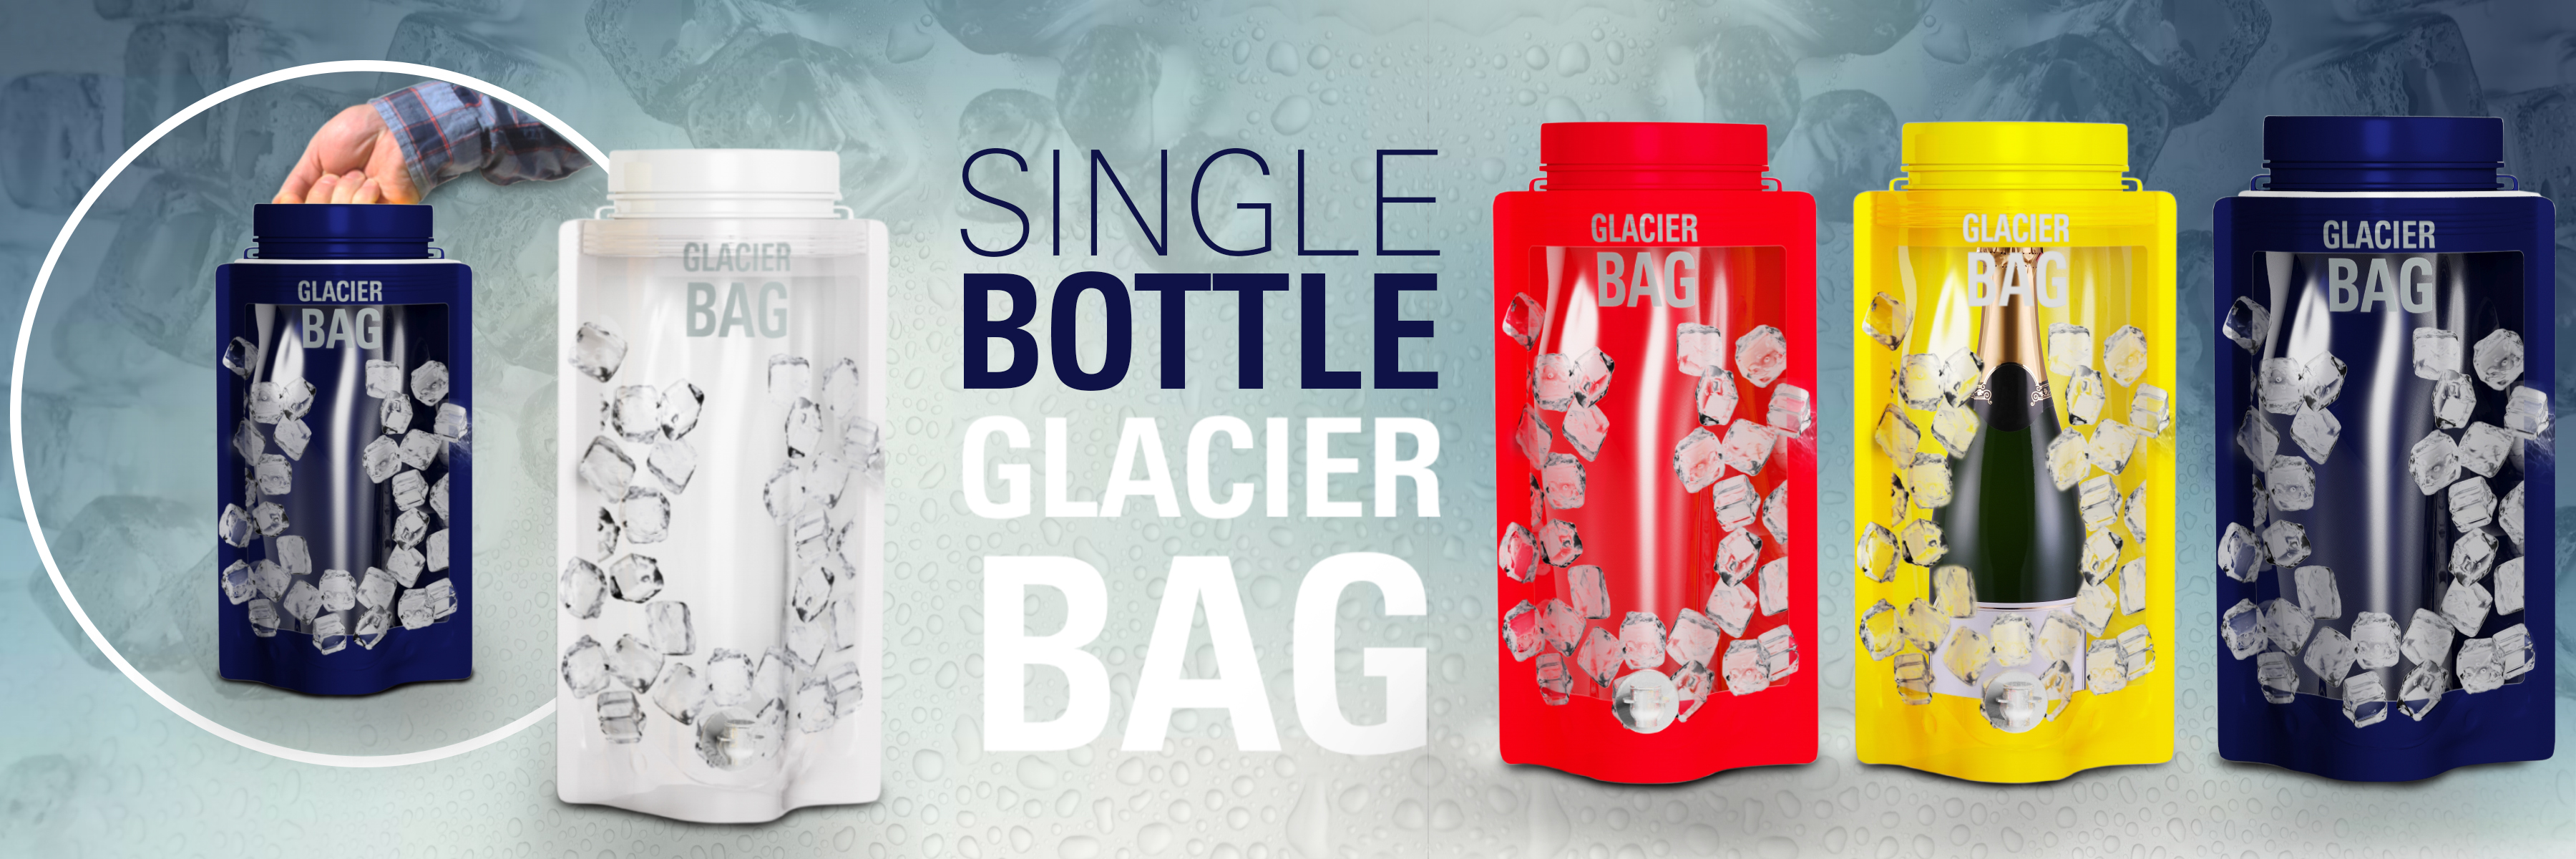 single glacier bag